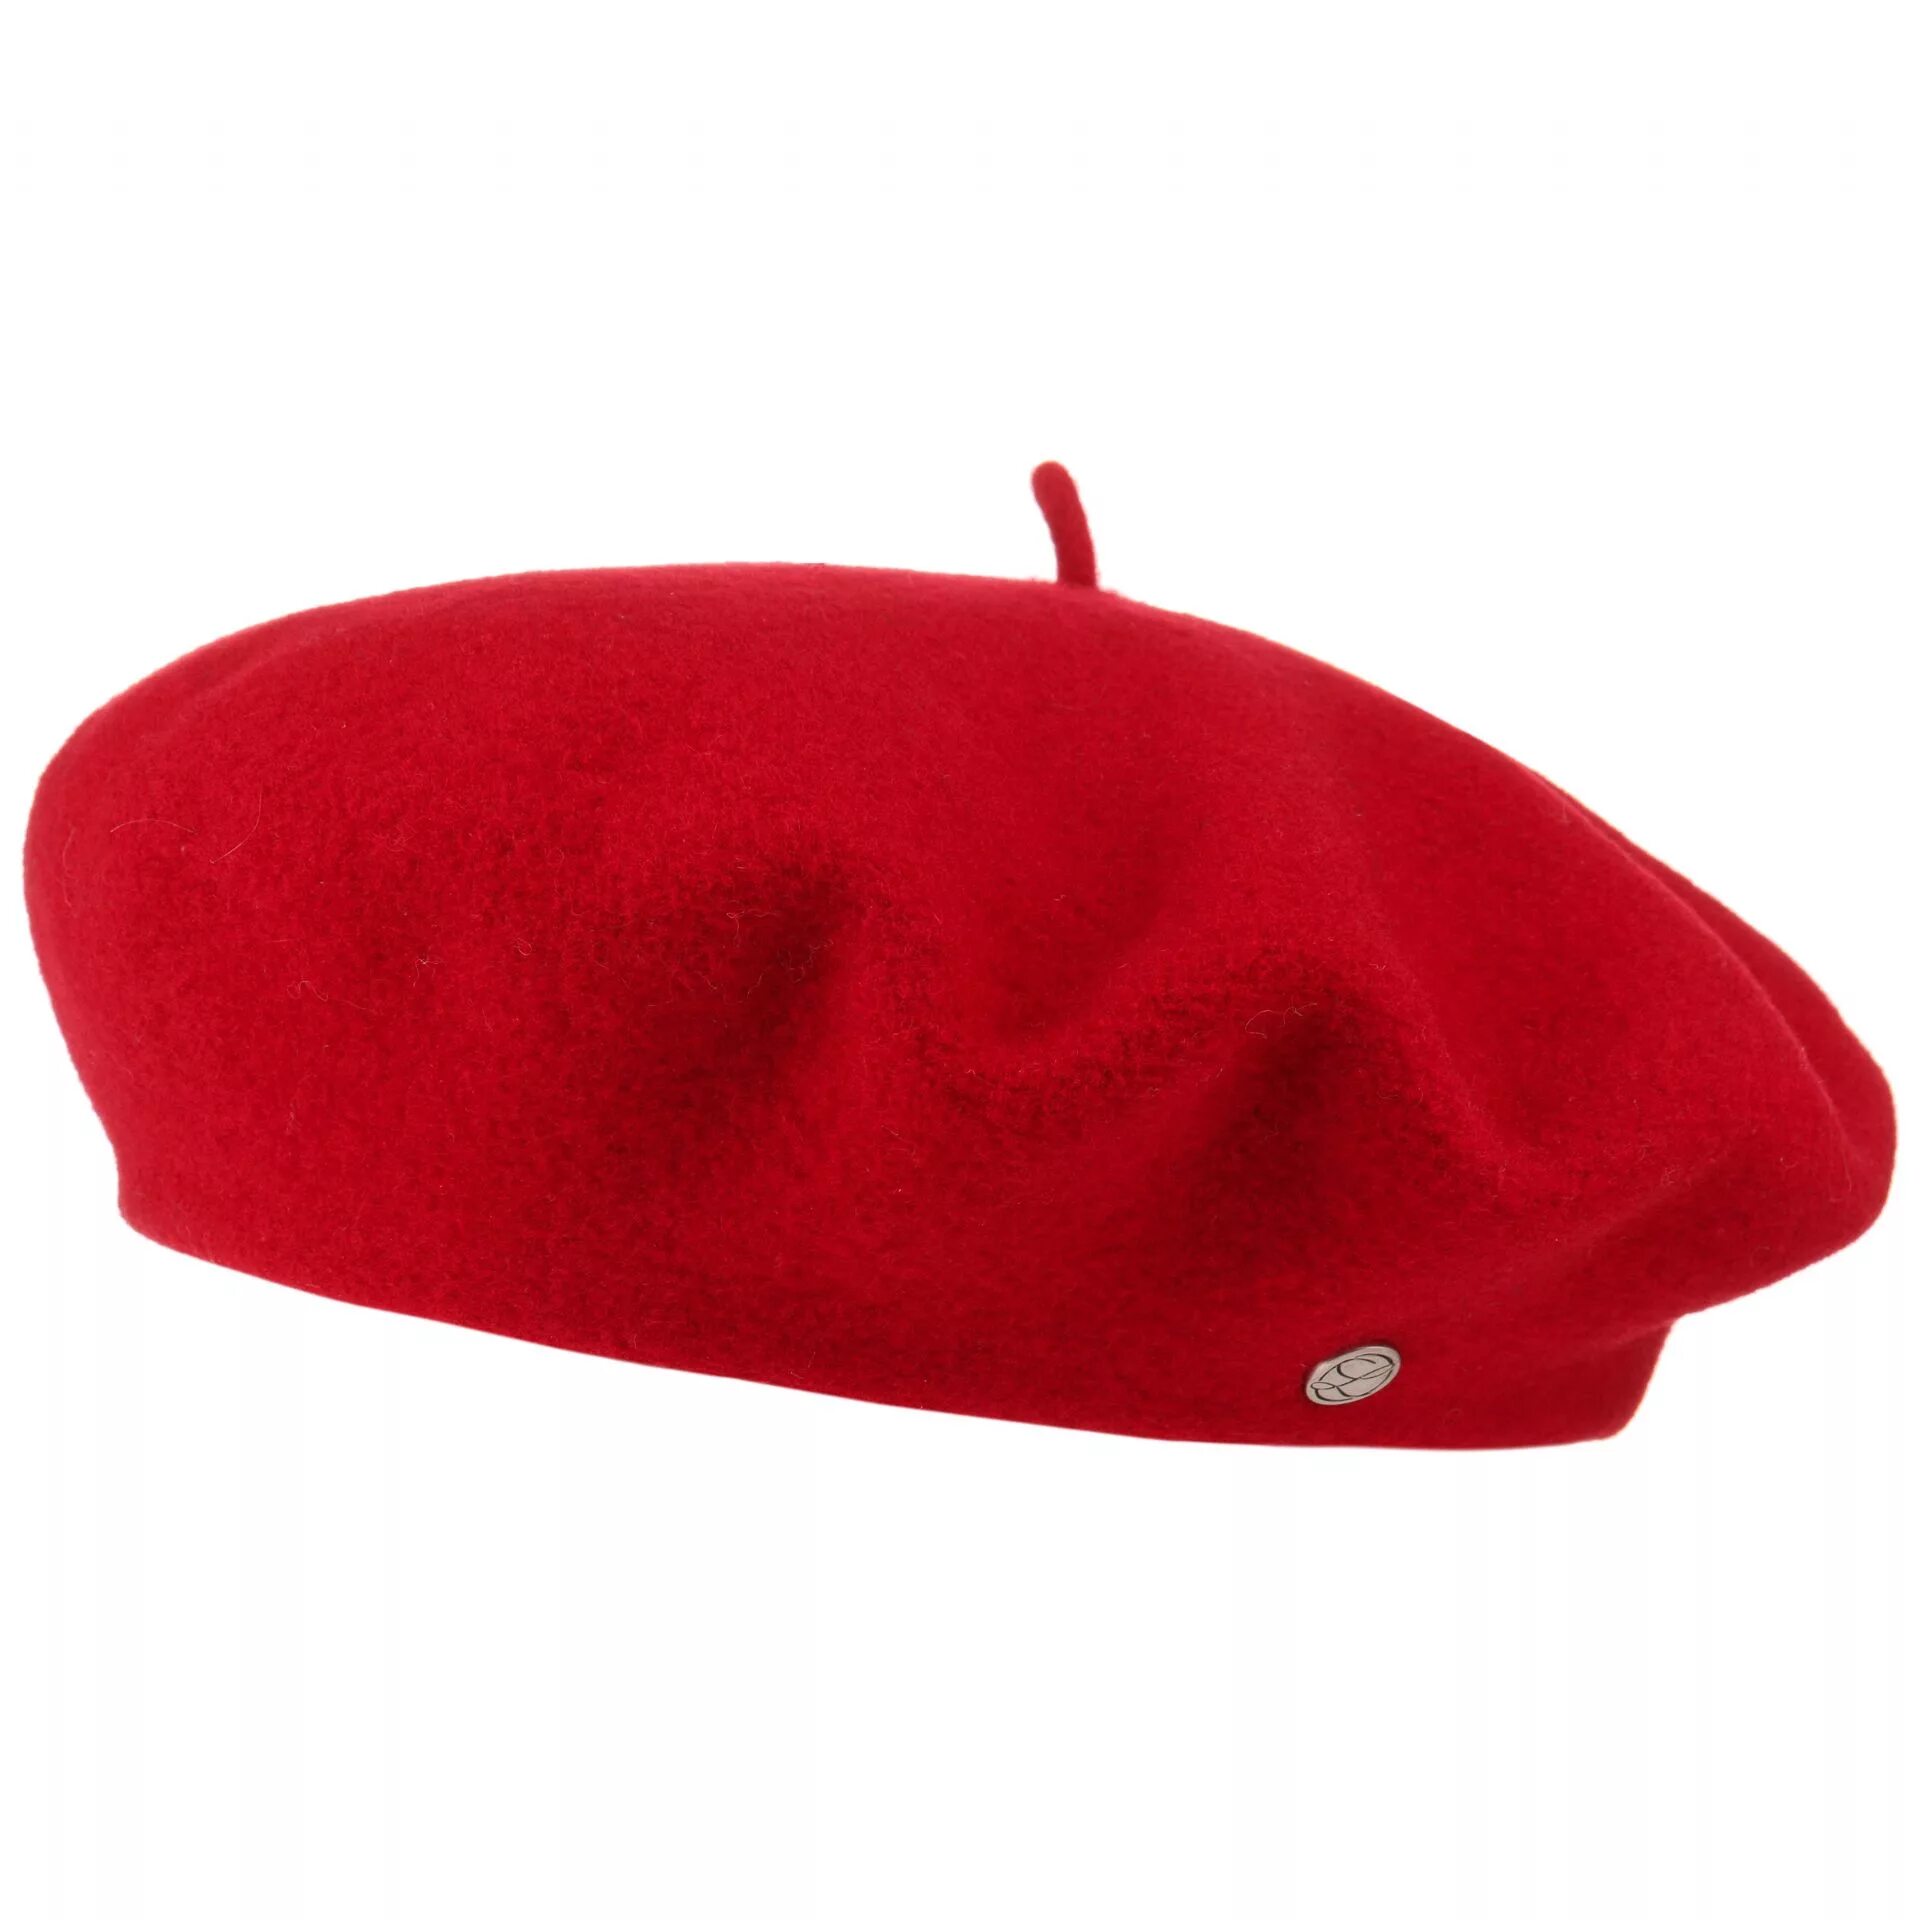 Красный француз. Кандибобер шапка. Кандибобер красный шапка. Берет красный. Французская шапочка.